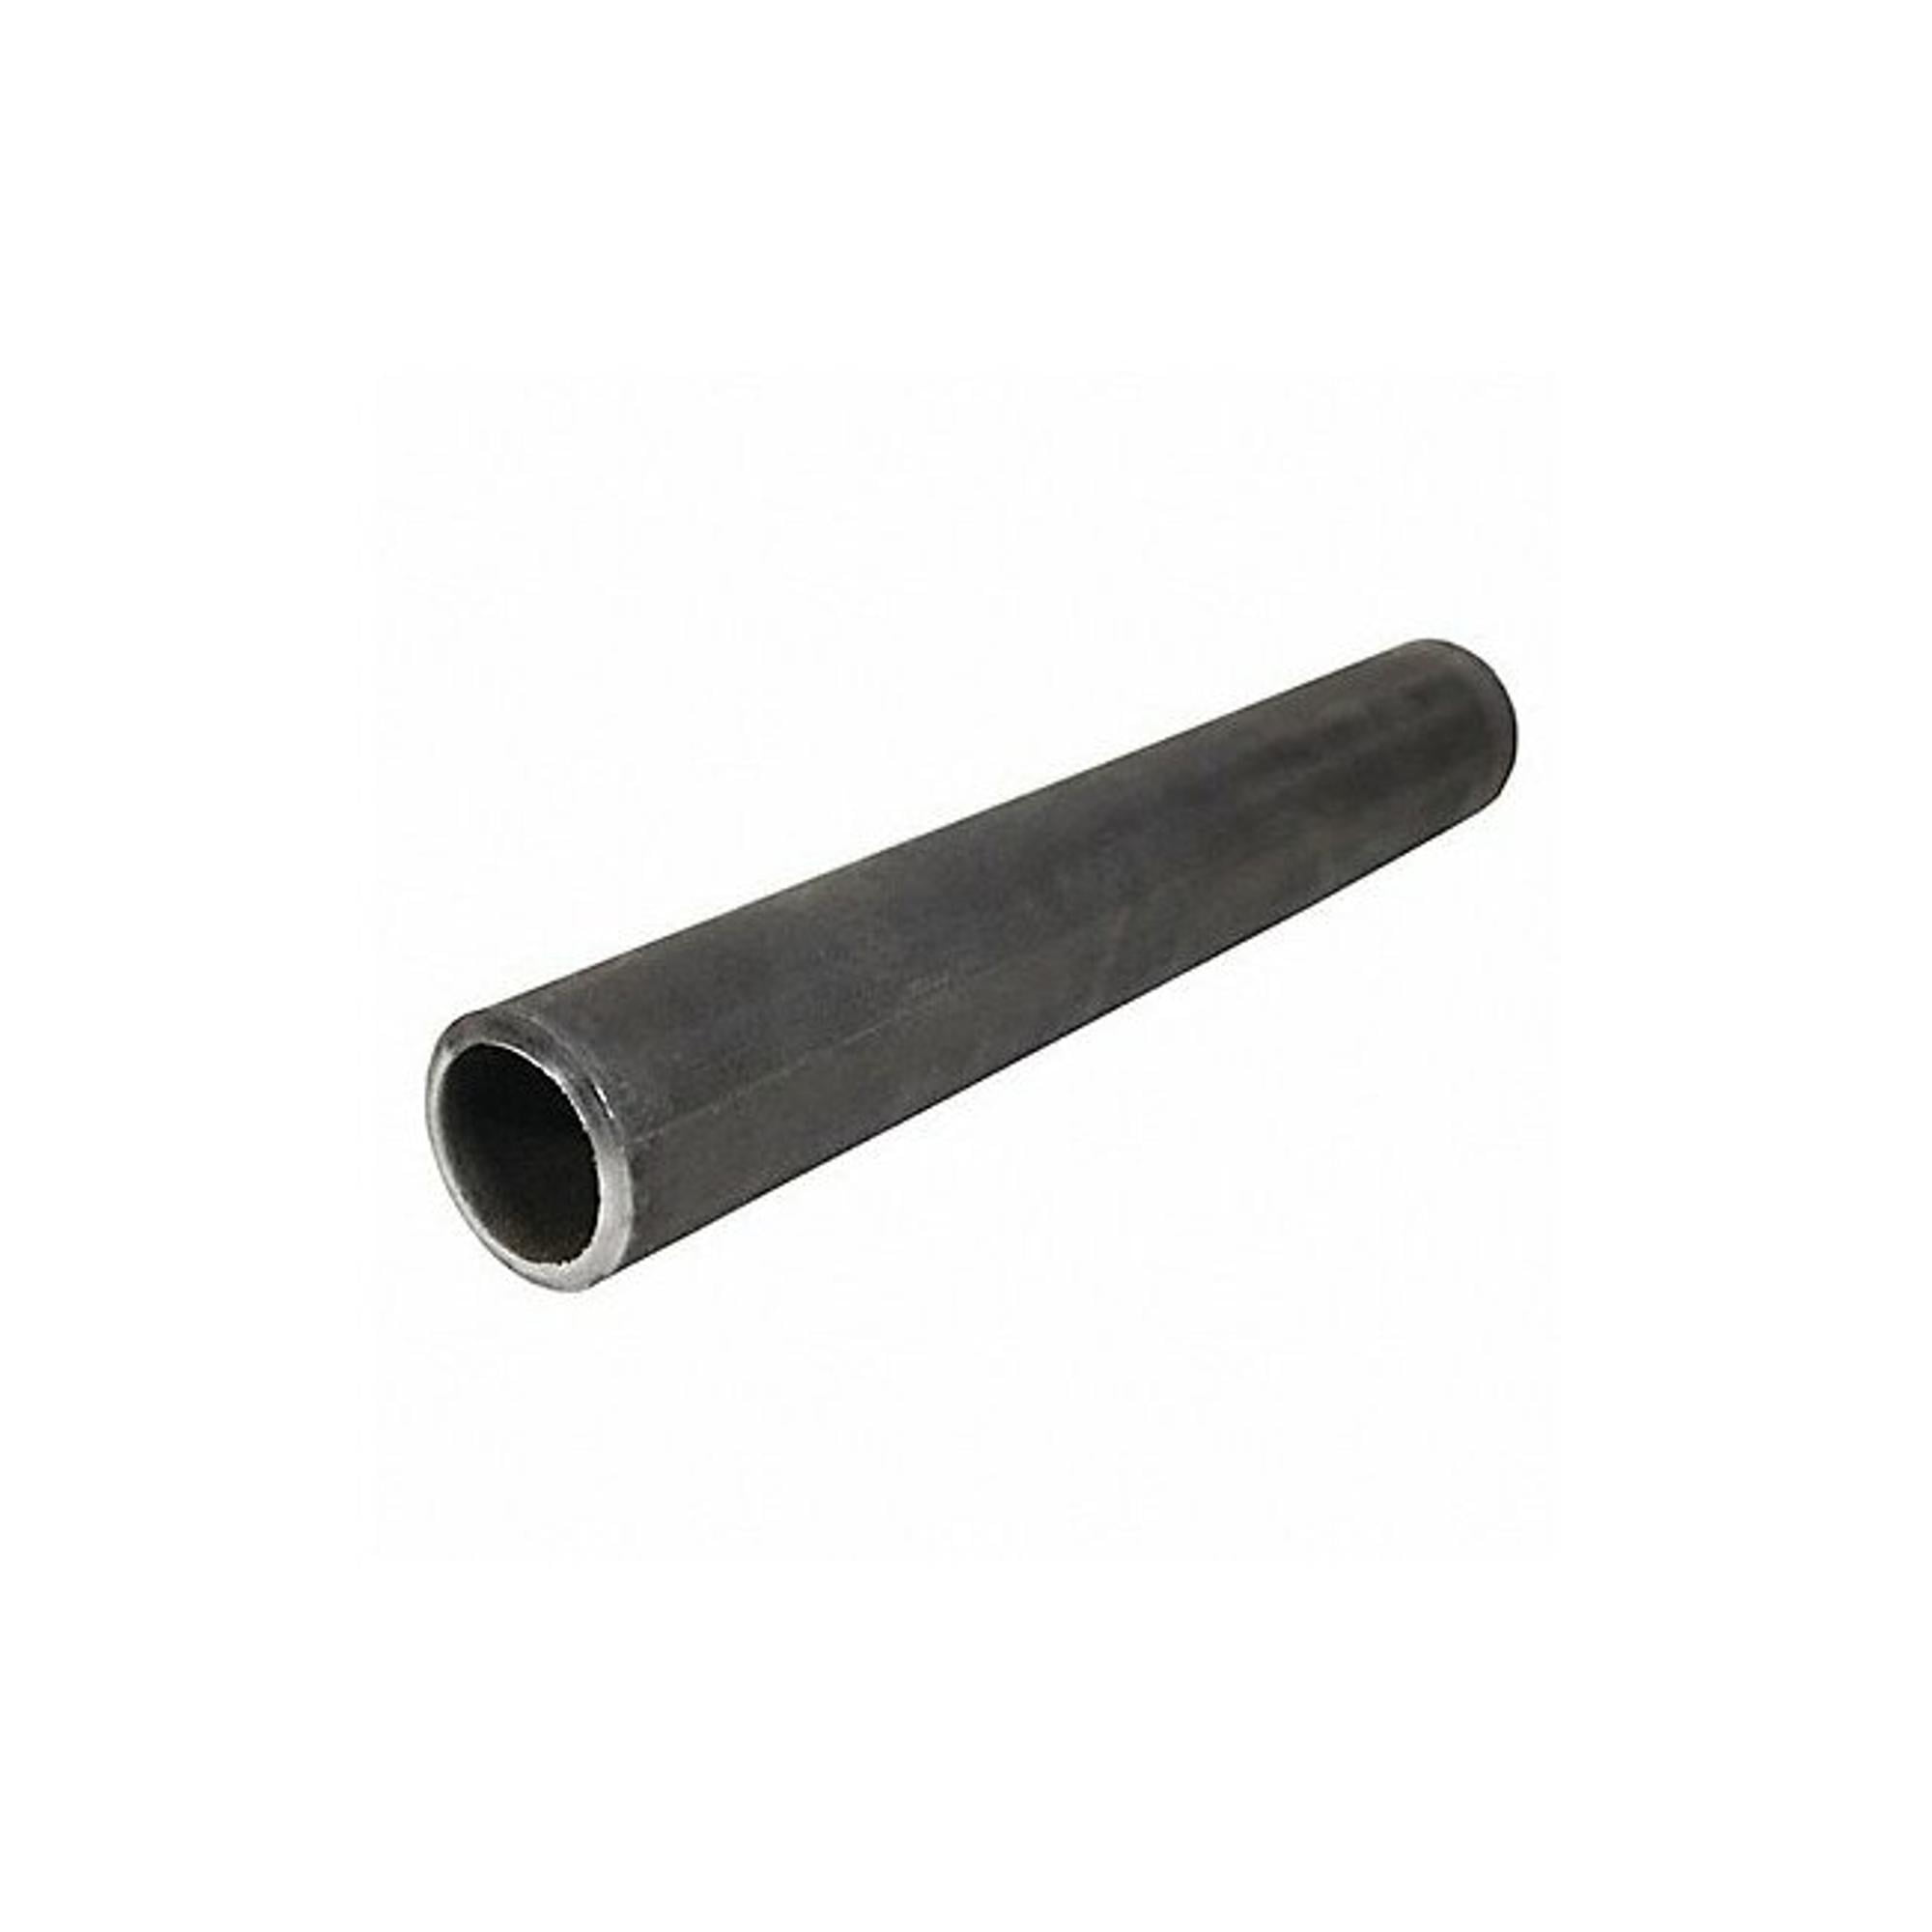 black iron pipe inside diameter